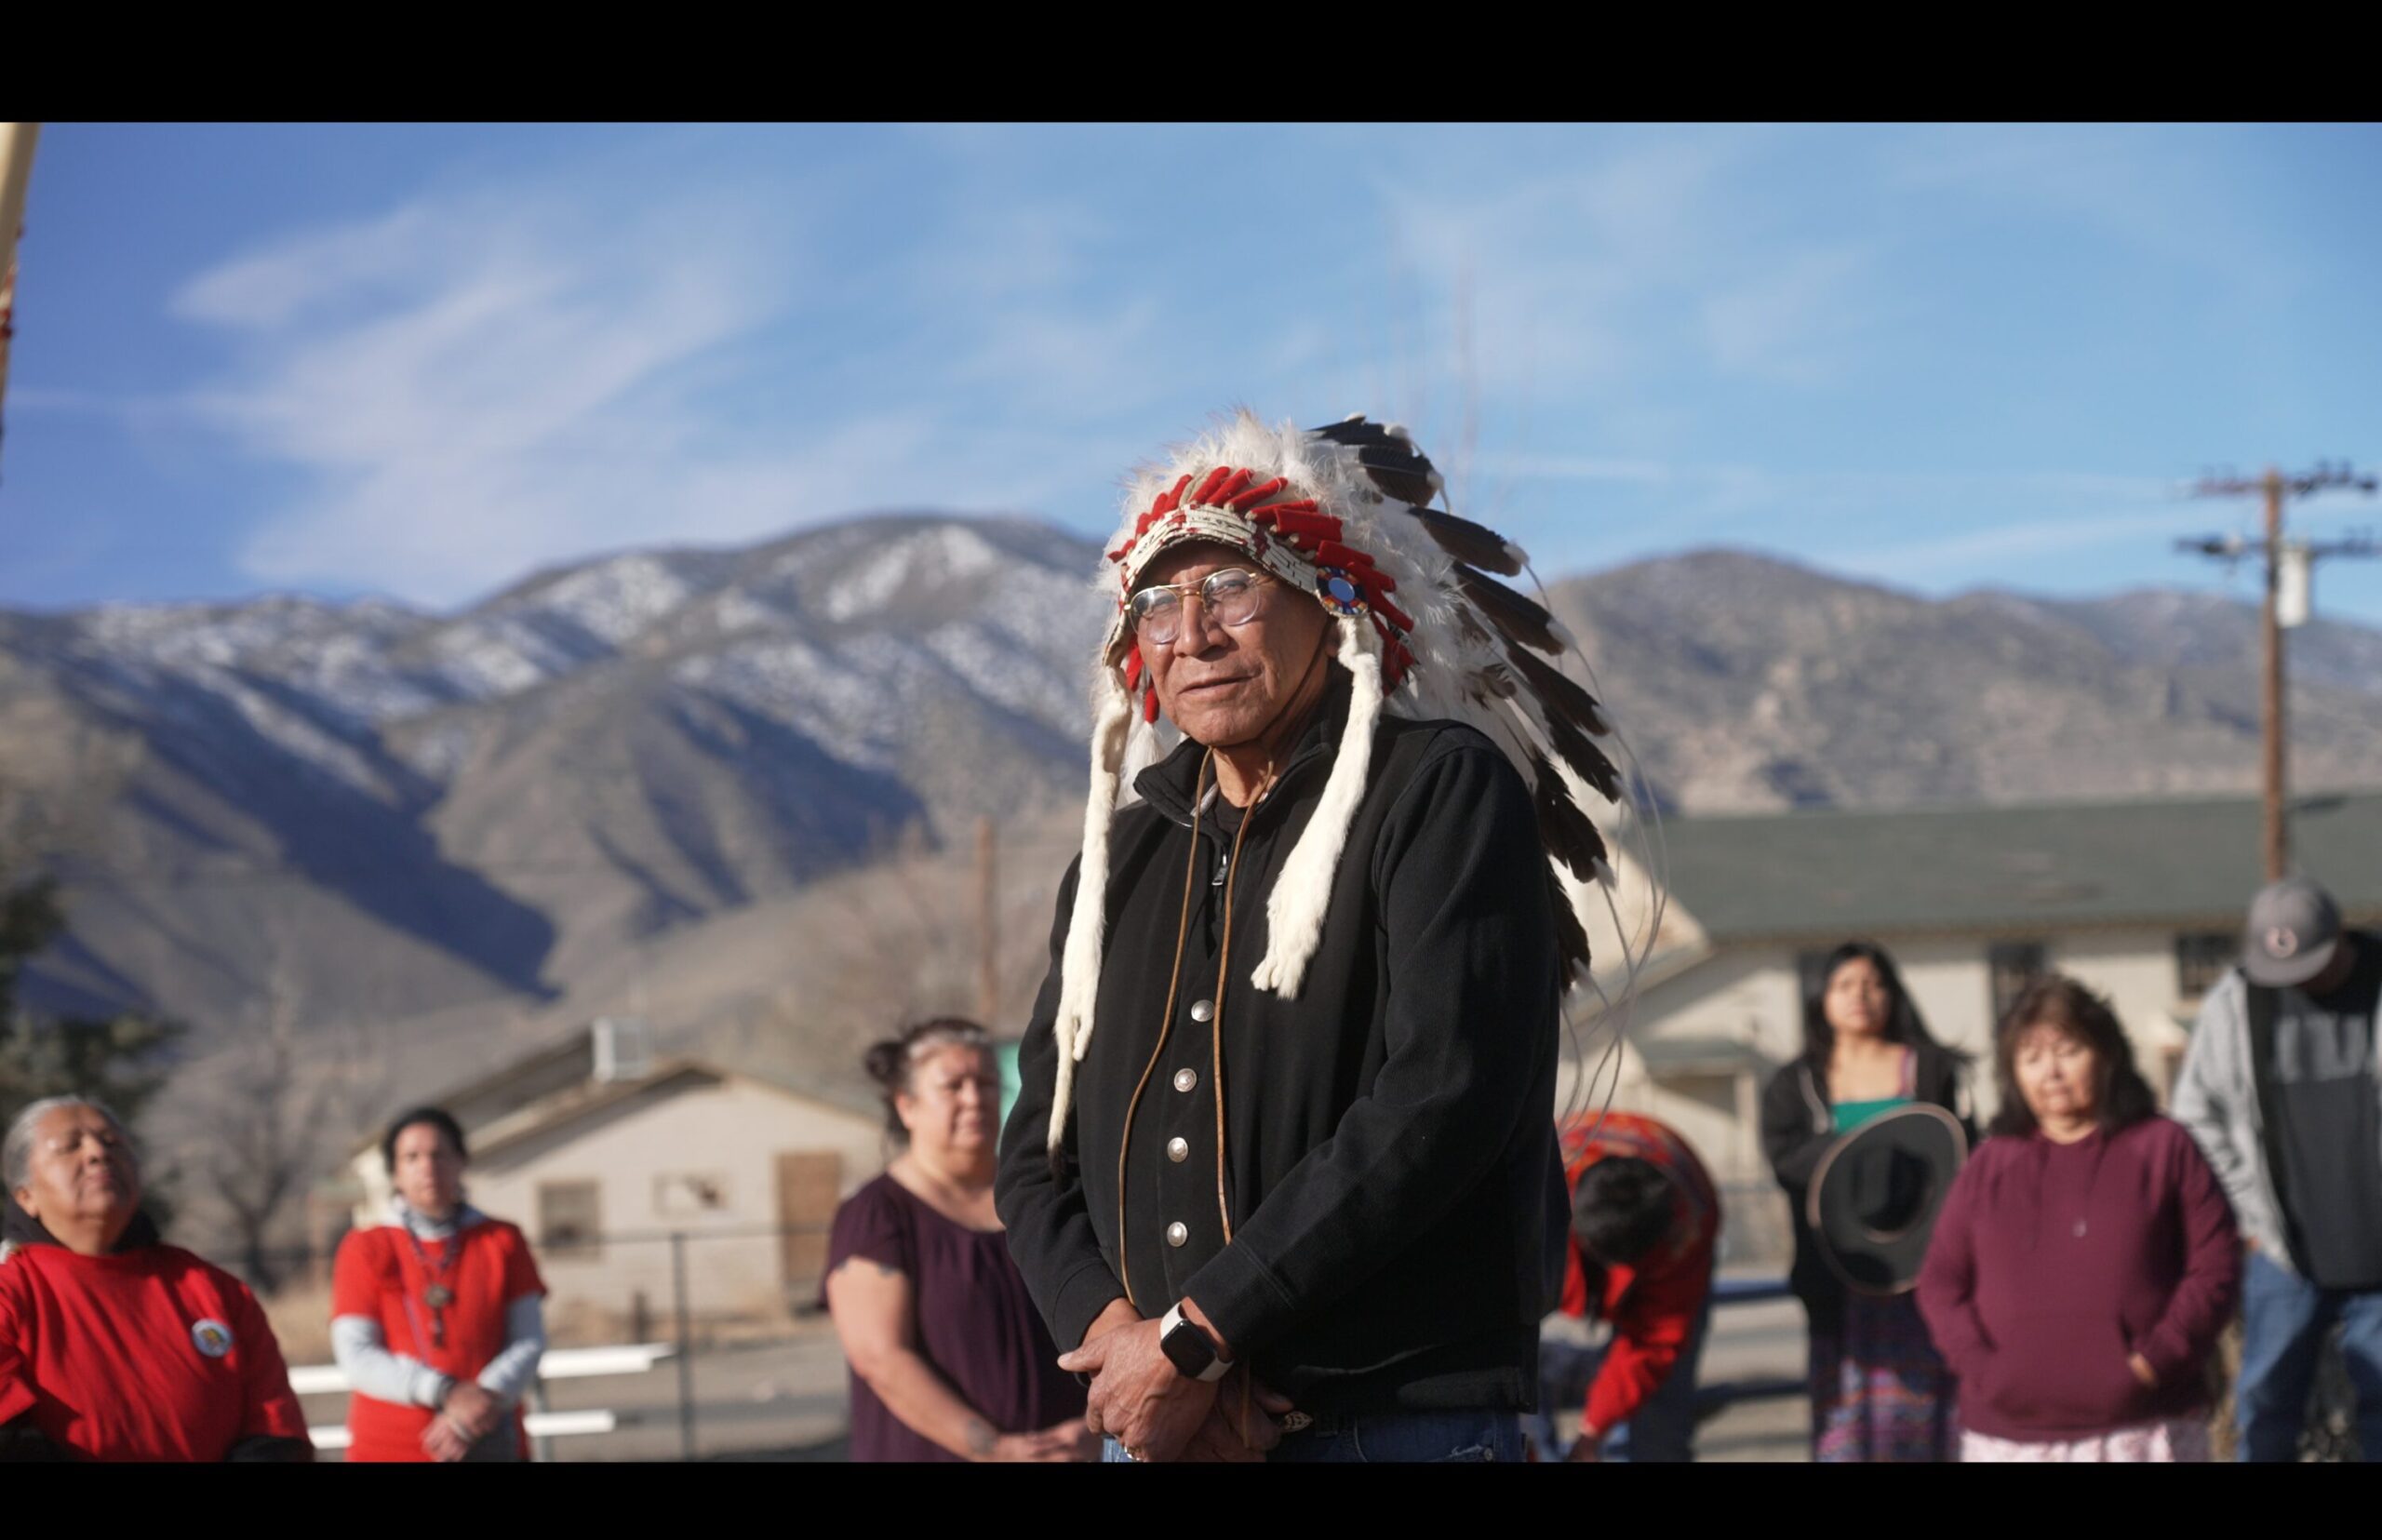 Third Annual Prayer Horse Ride, traversing Native mine-affected communities in Nevada